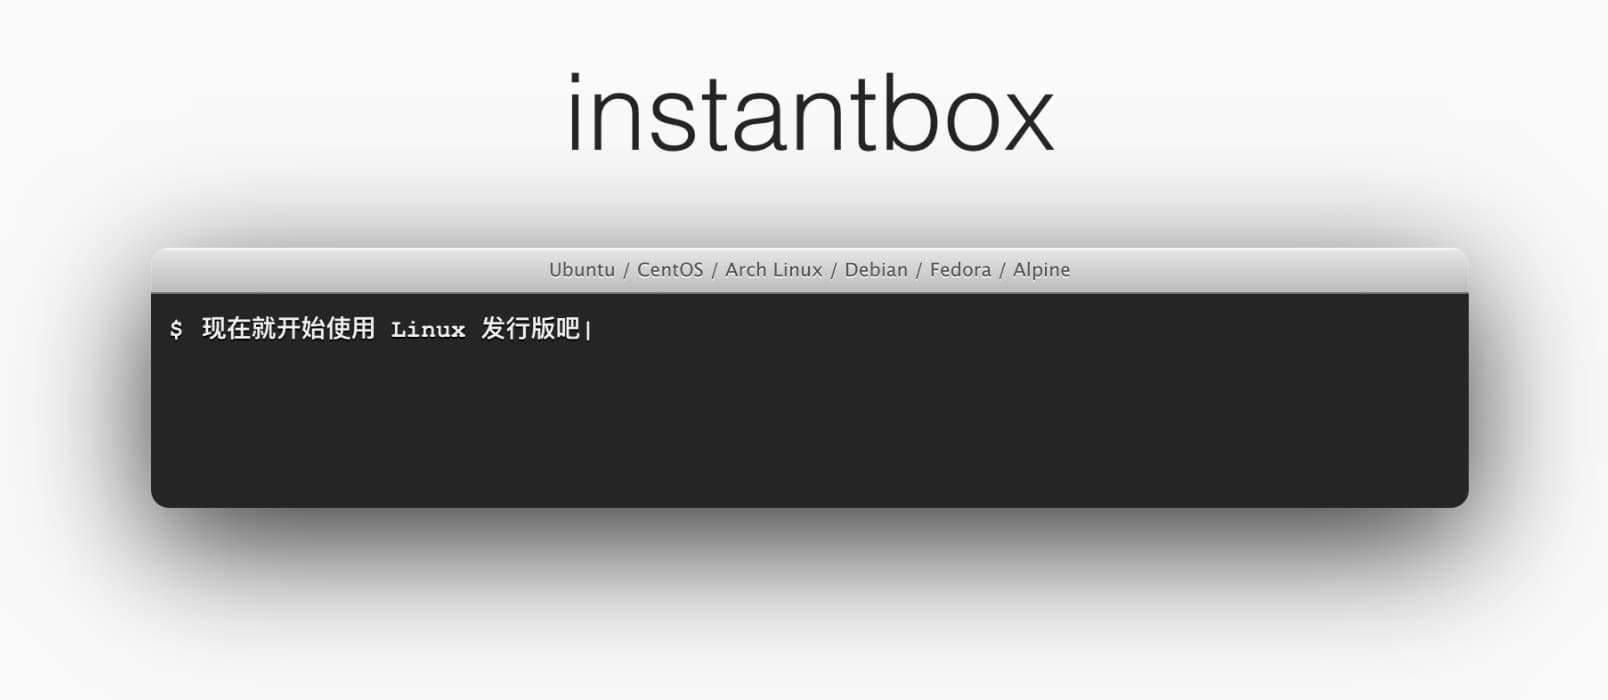 instantbox - 几秒内启动一个干净的 Linux 系统 1